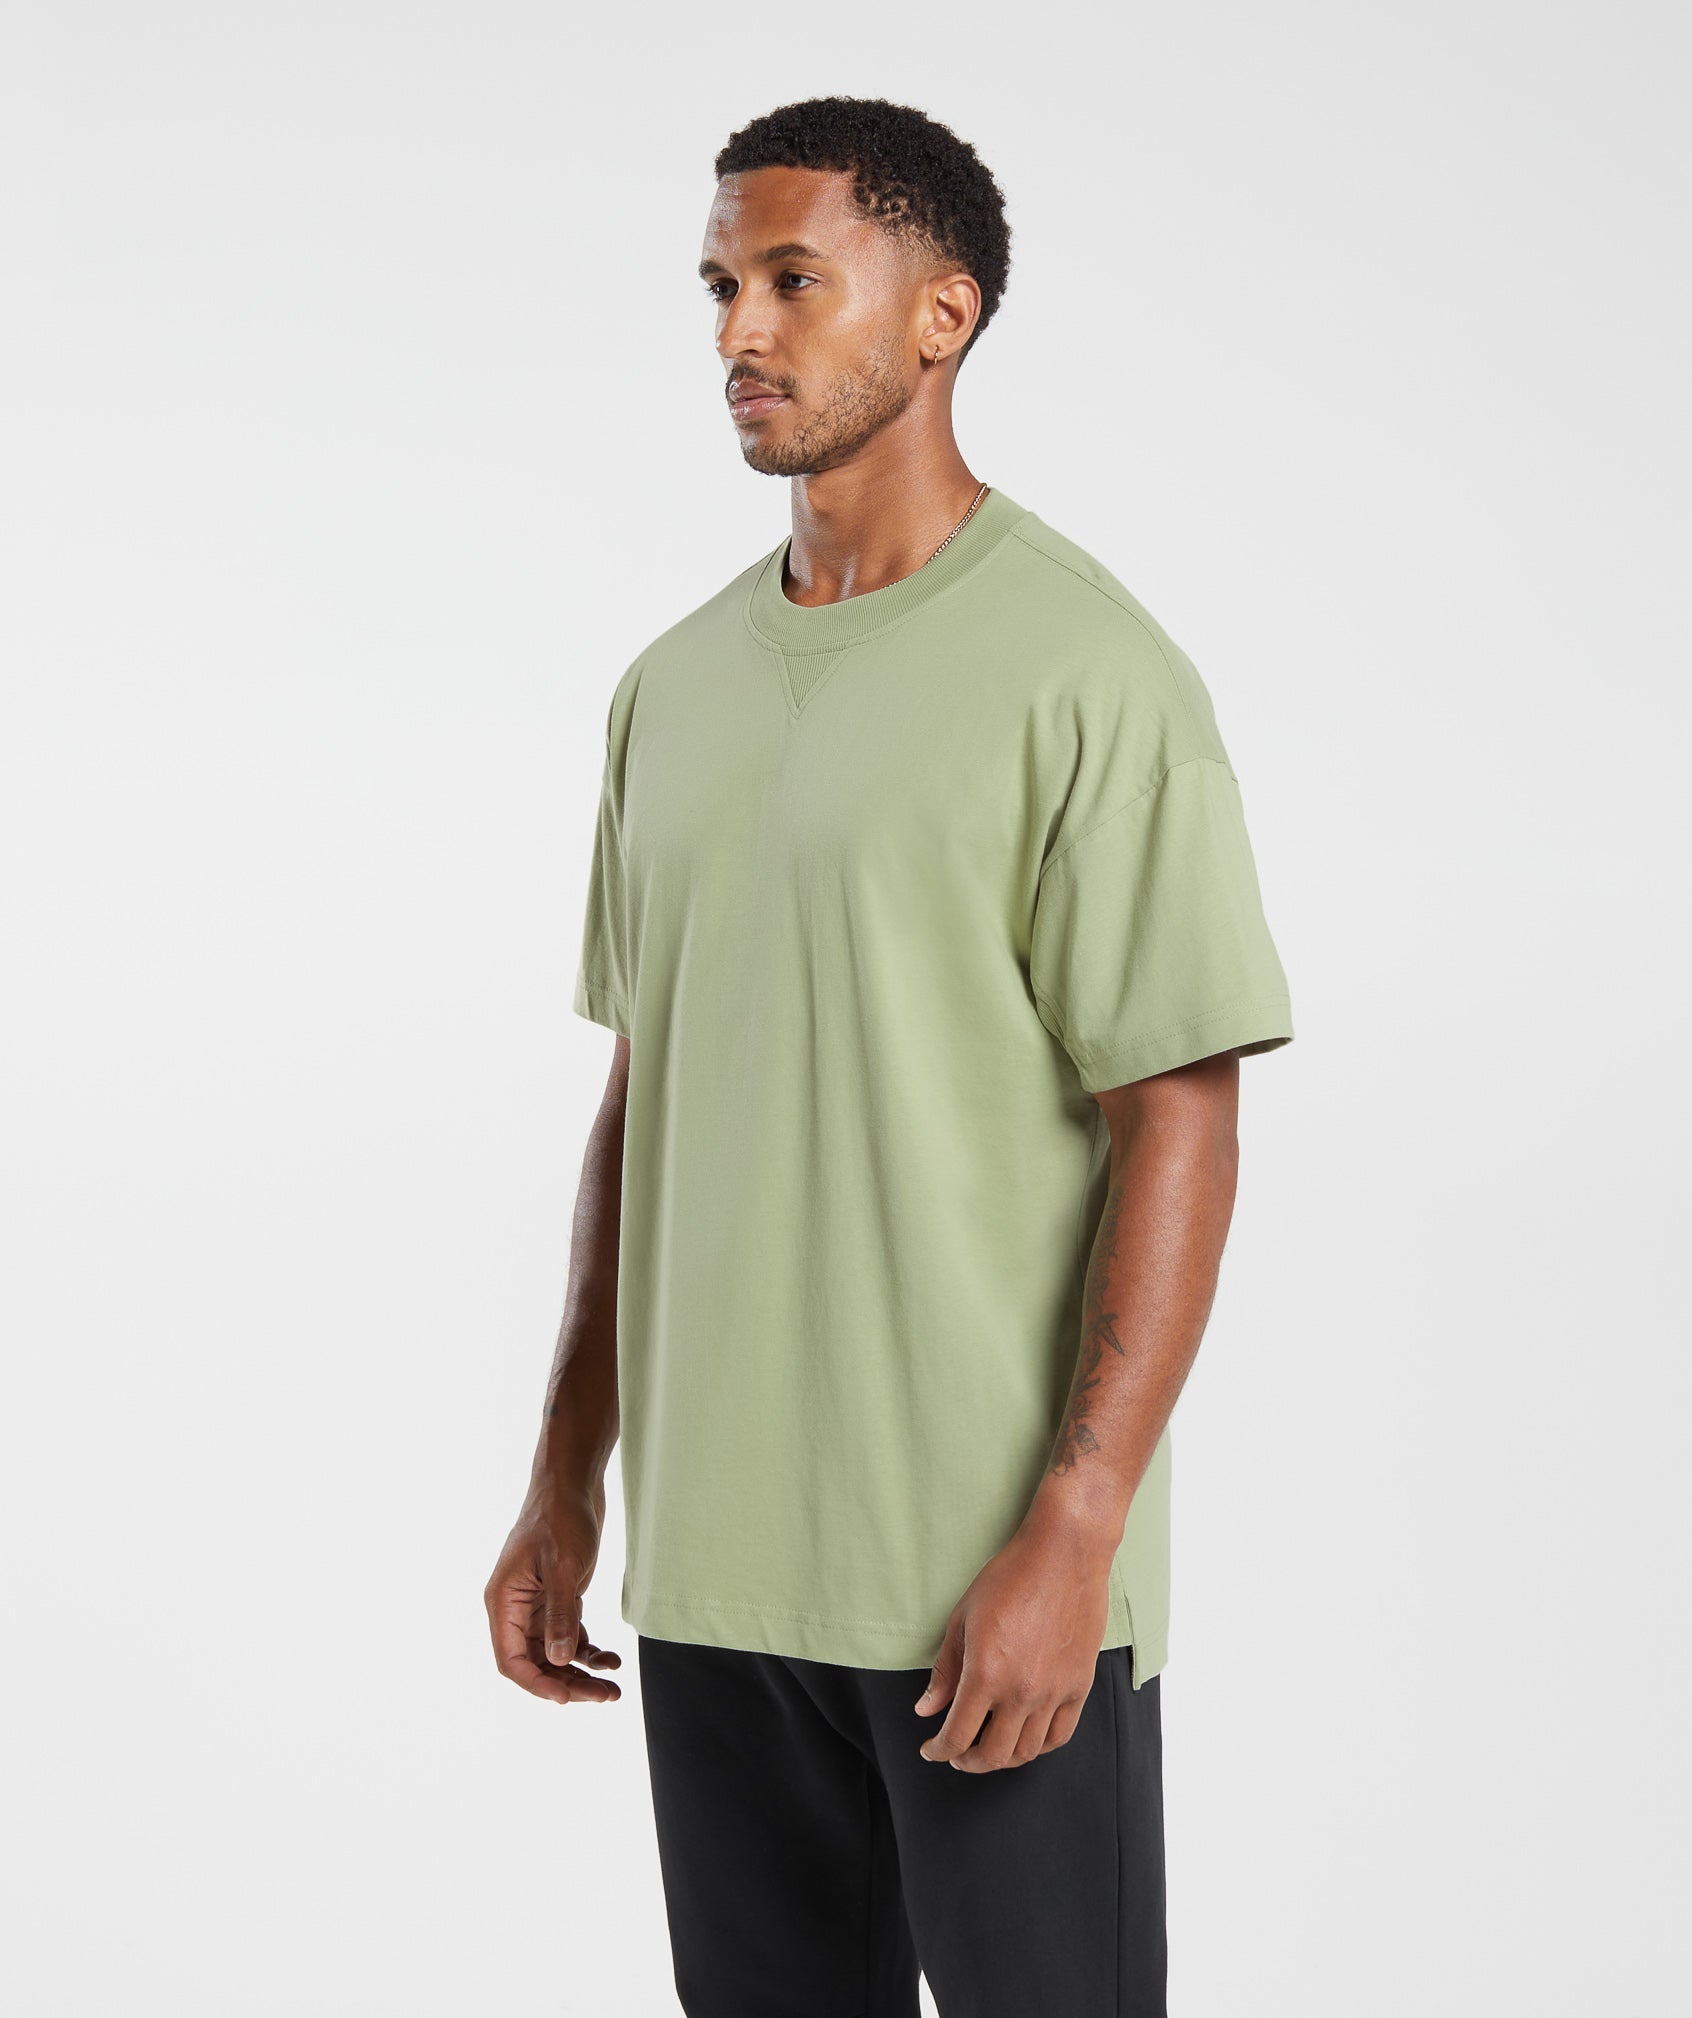 Rest Day Essentials T-Shirt in Light Sage Green - view 3